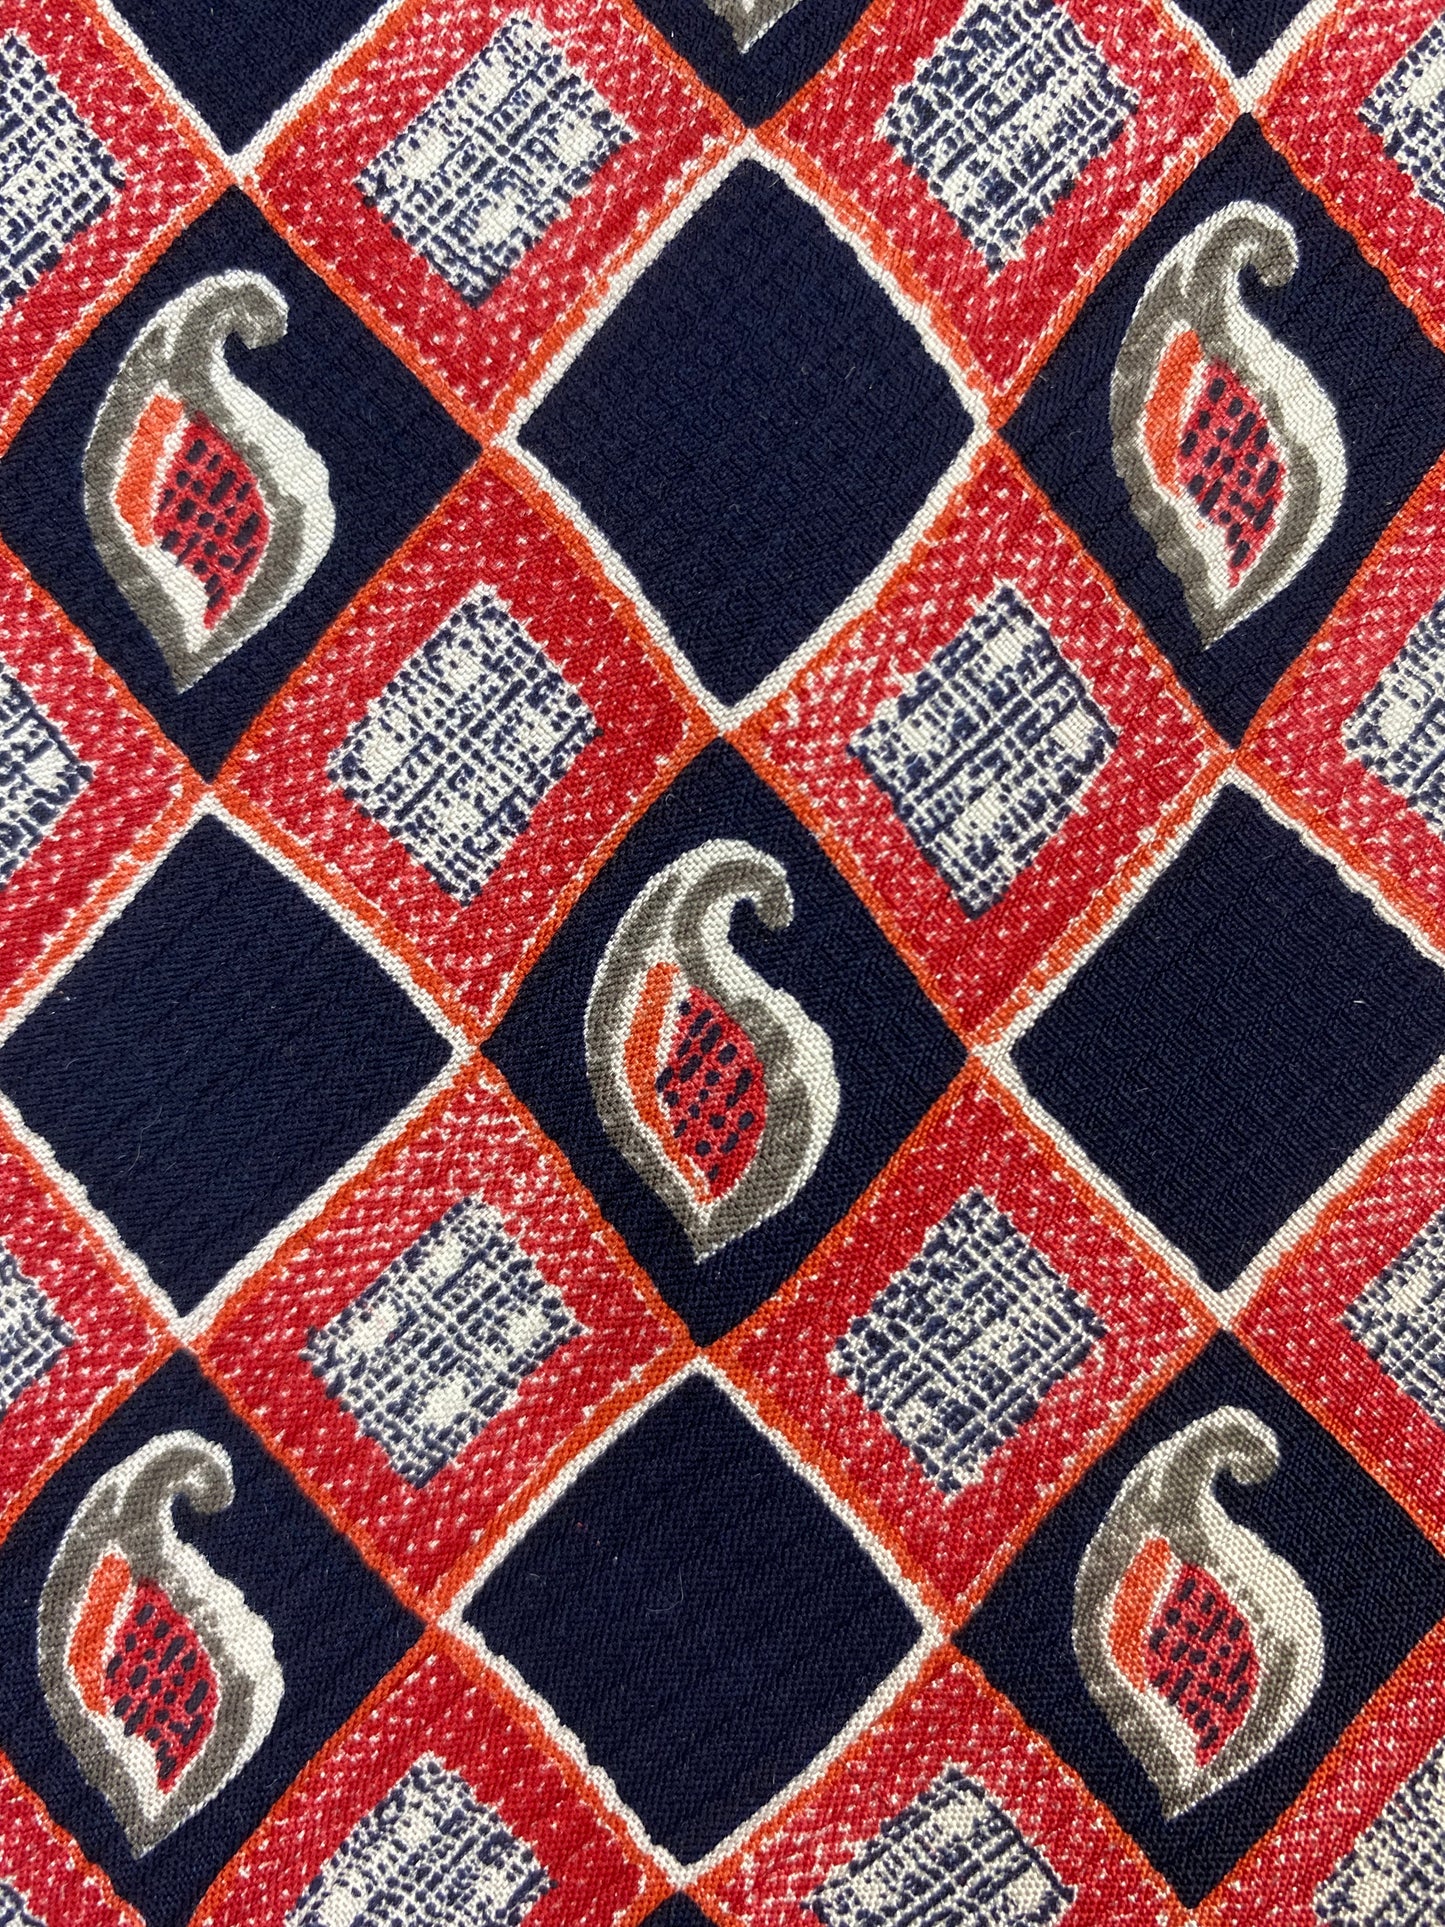 Close-up of: 90s Deadstock Silk Necktie, Men's Vintage Red/Blue Check Boteh Pattern Tie, NOS